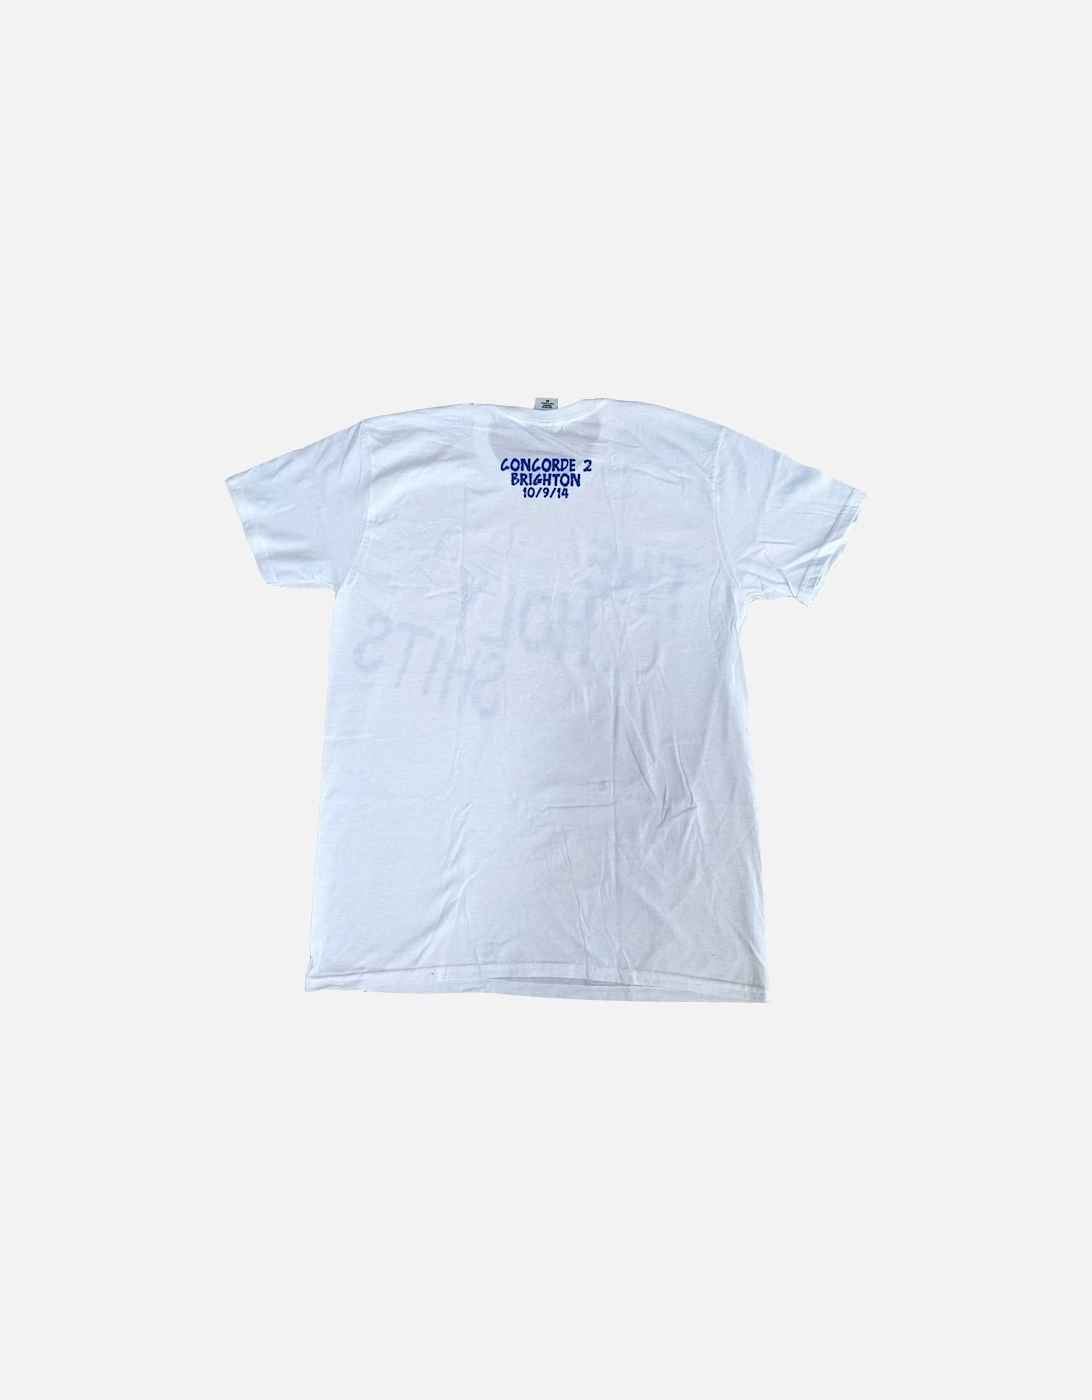 Unisex Adult The Holy Shits Brighton 2014 Cotton T-Shirt